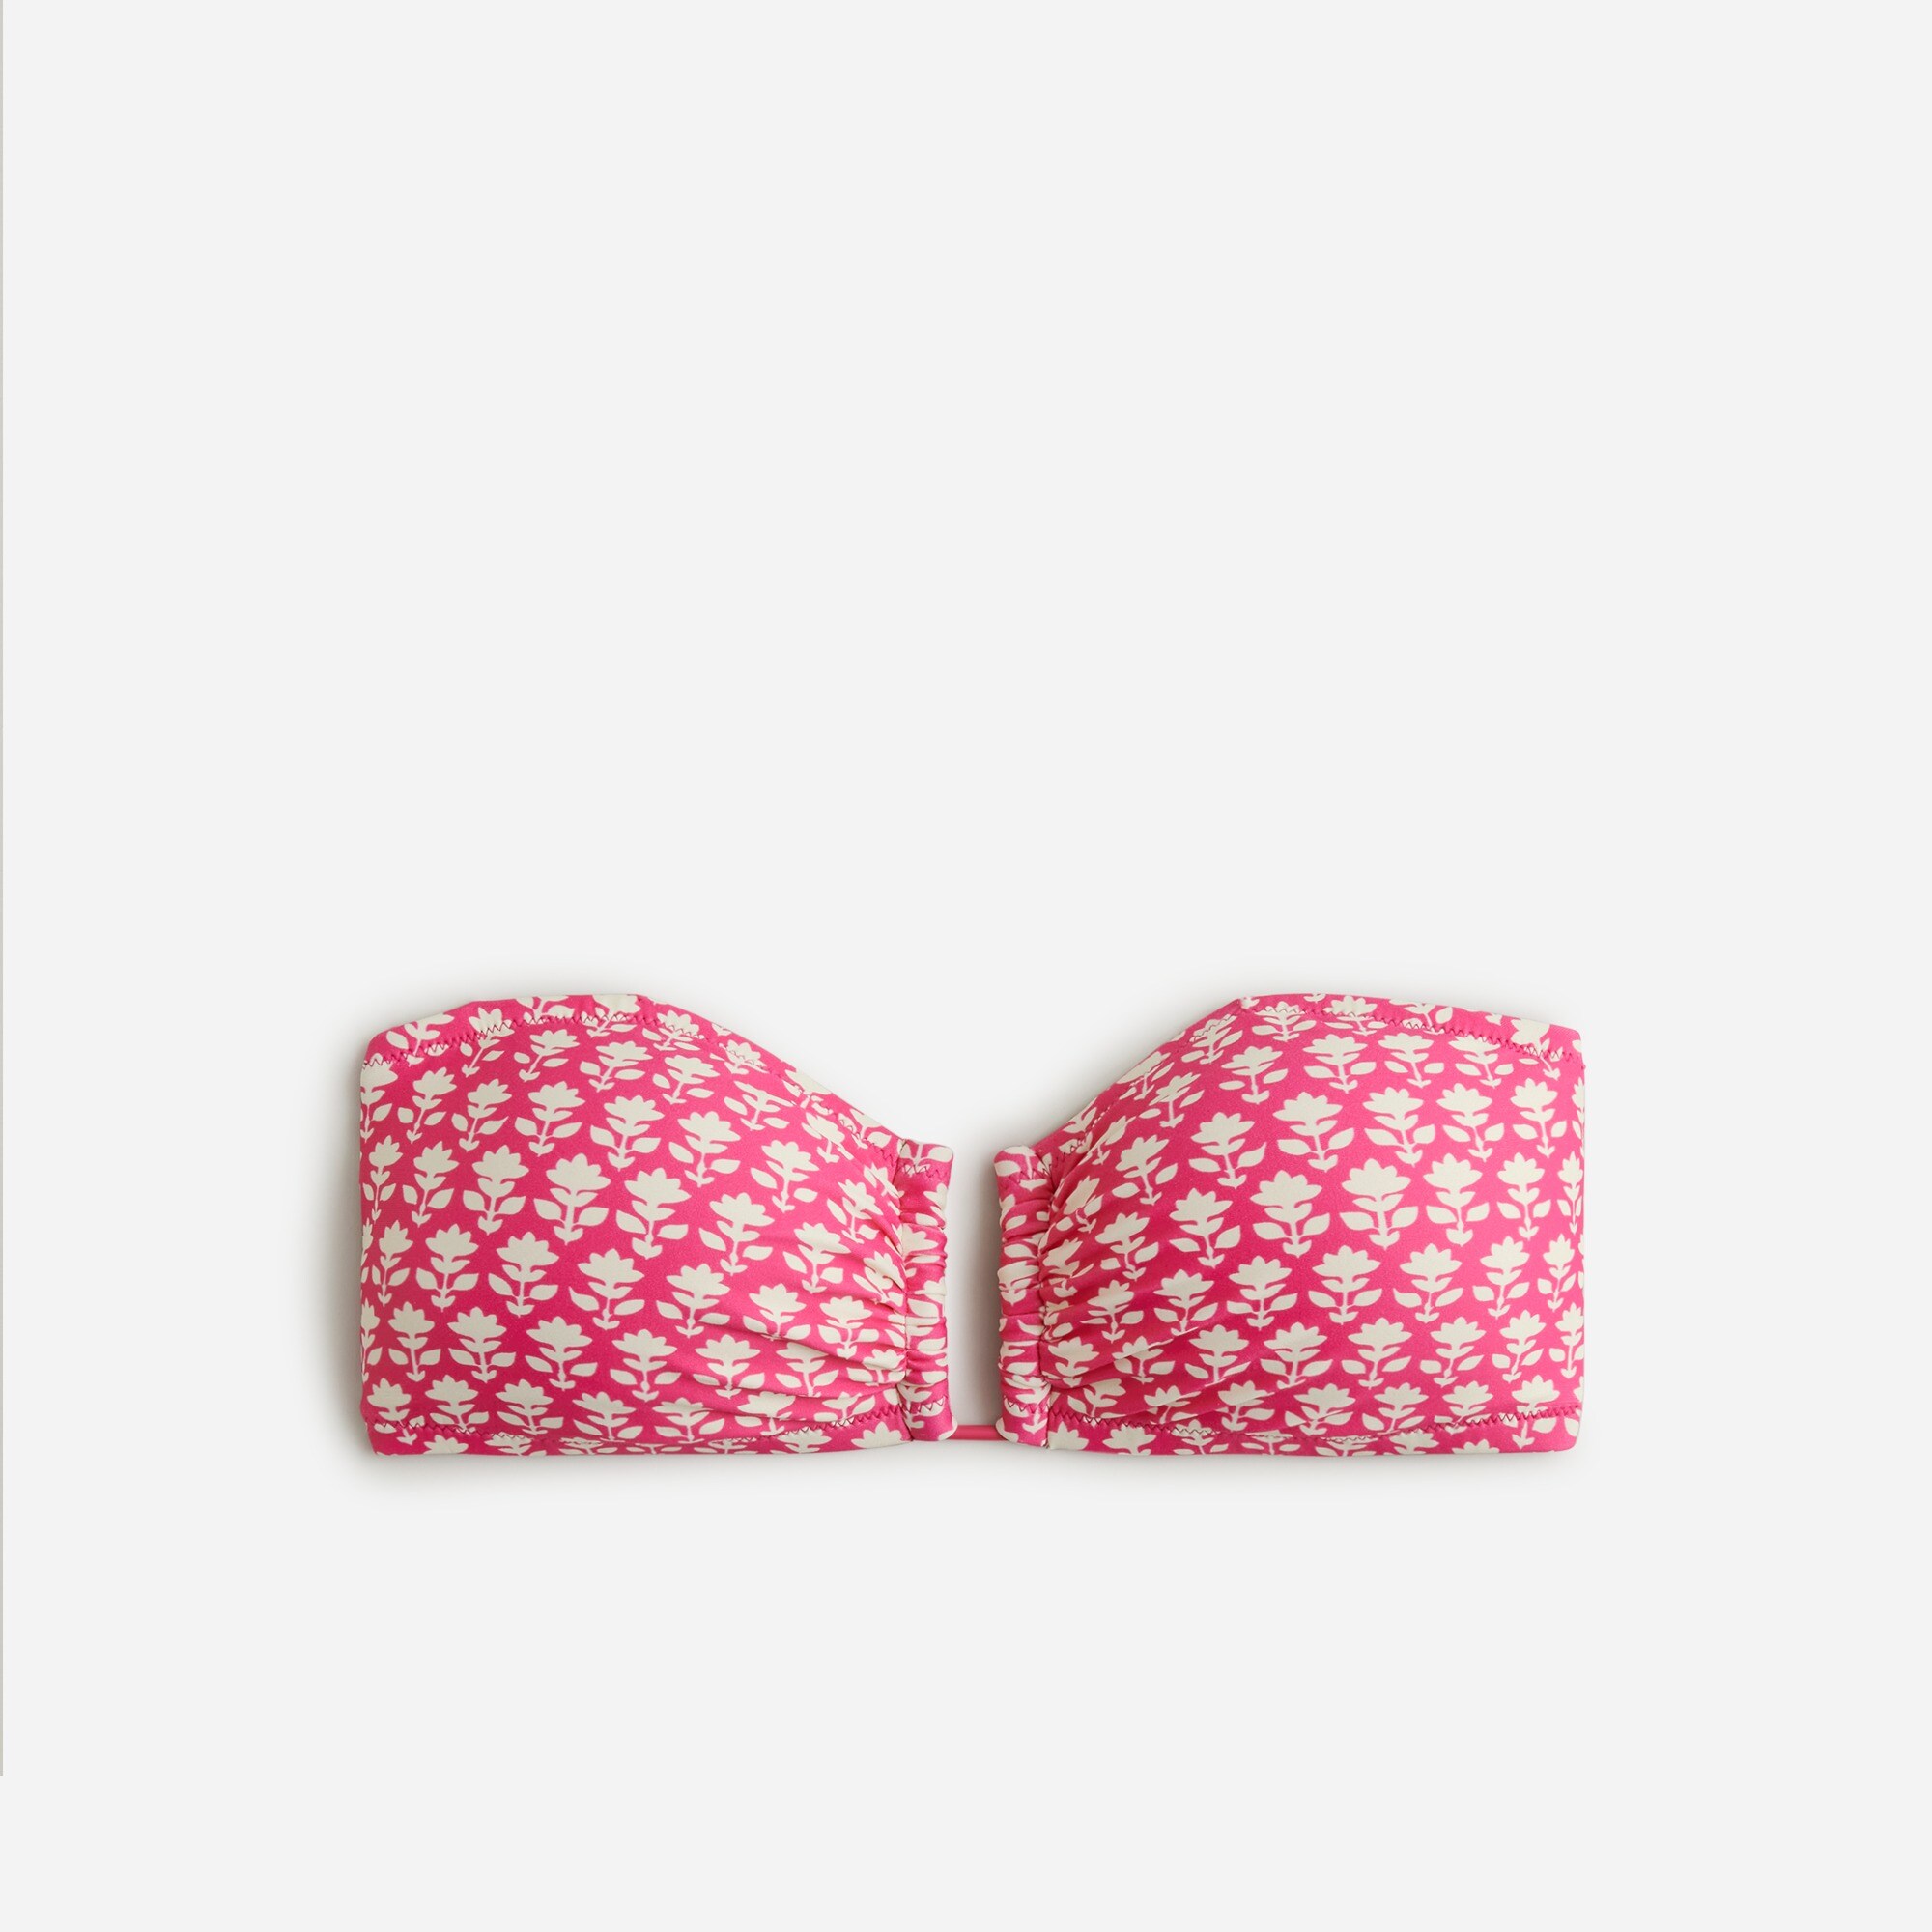  U-front bandeau bikini top in pink stamp floral